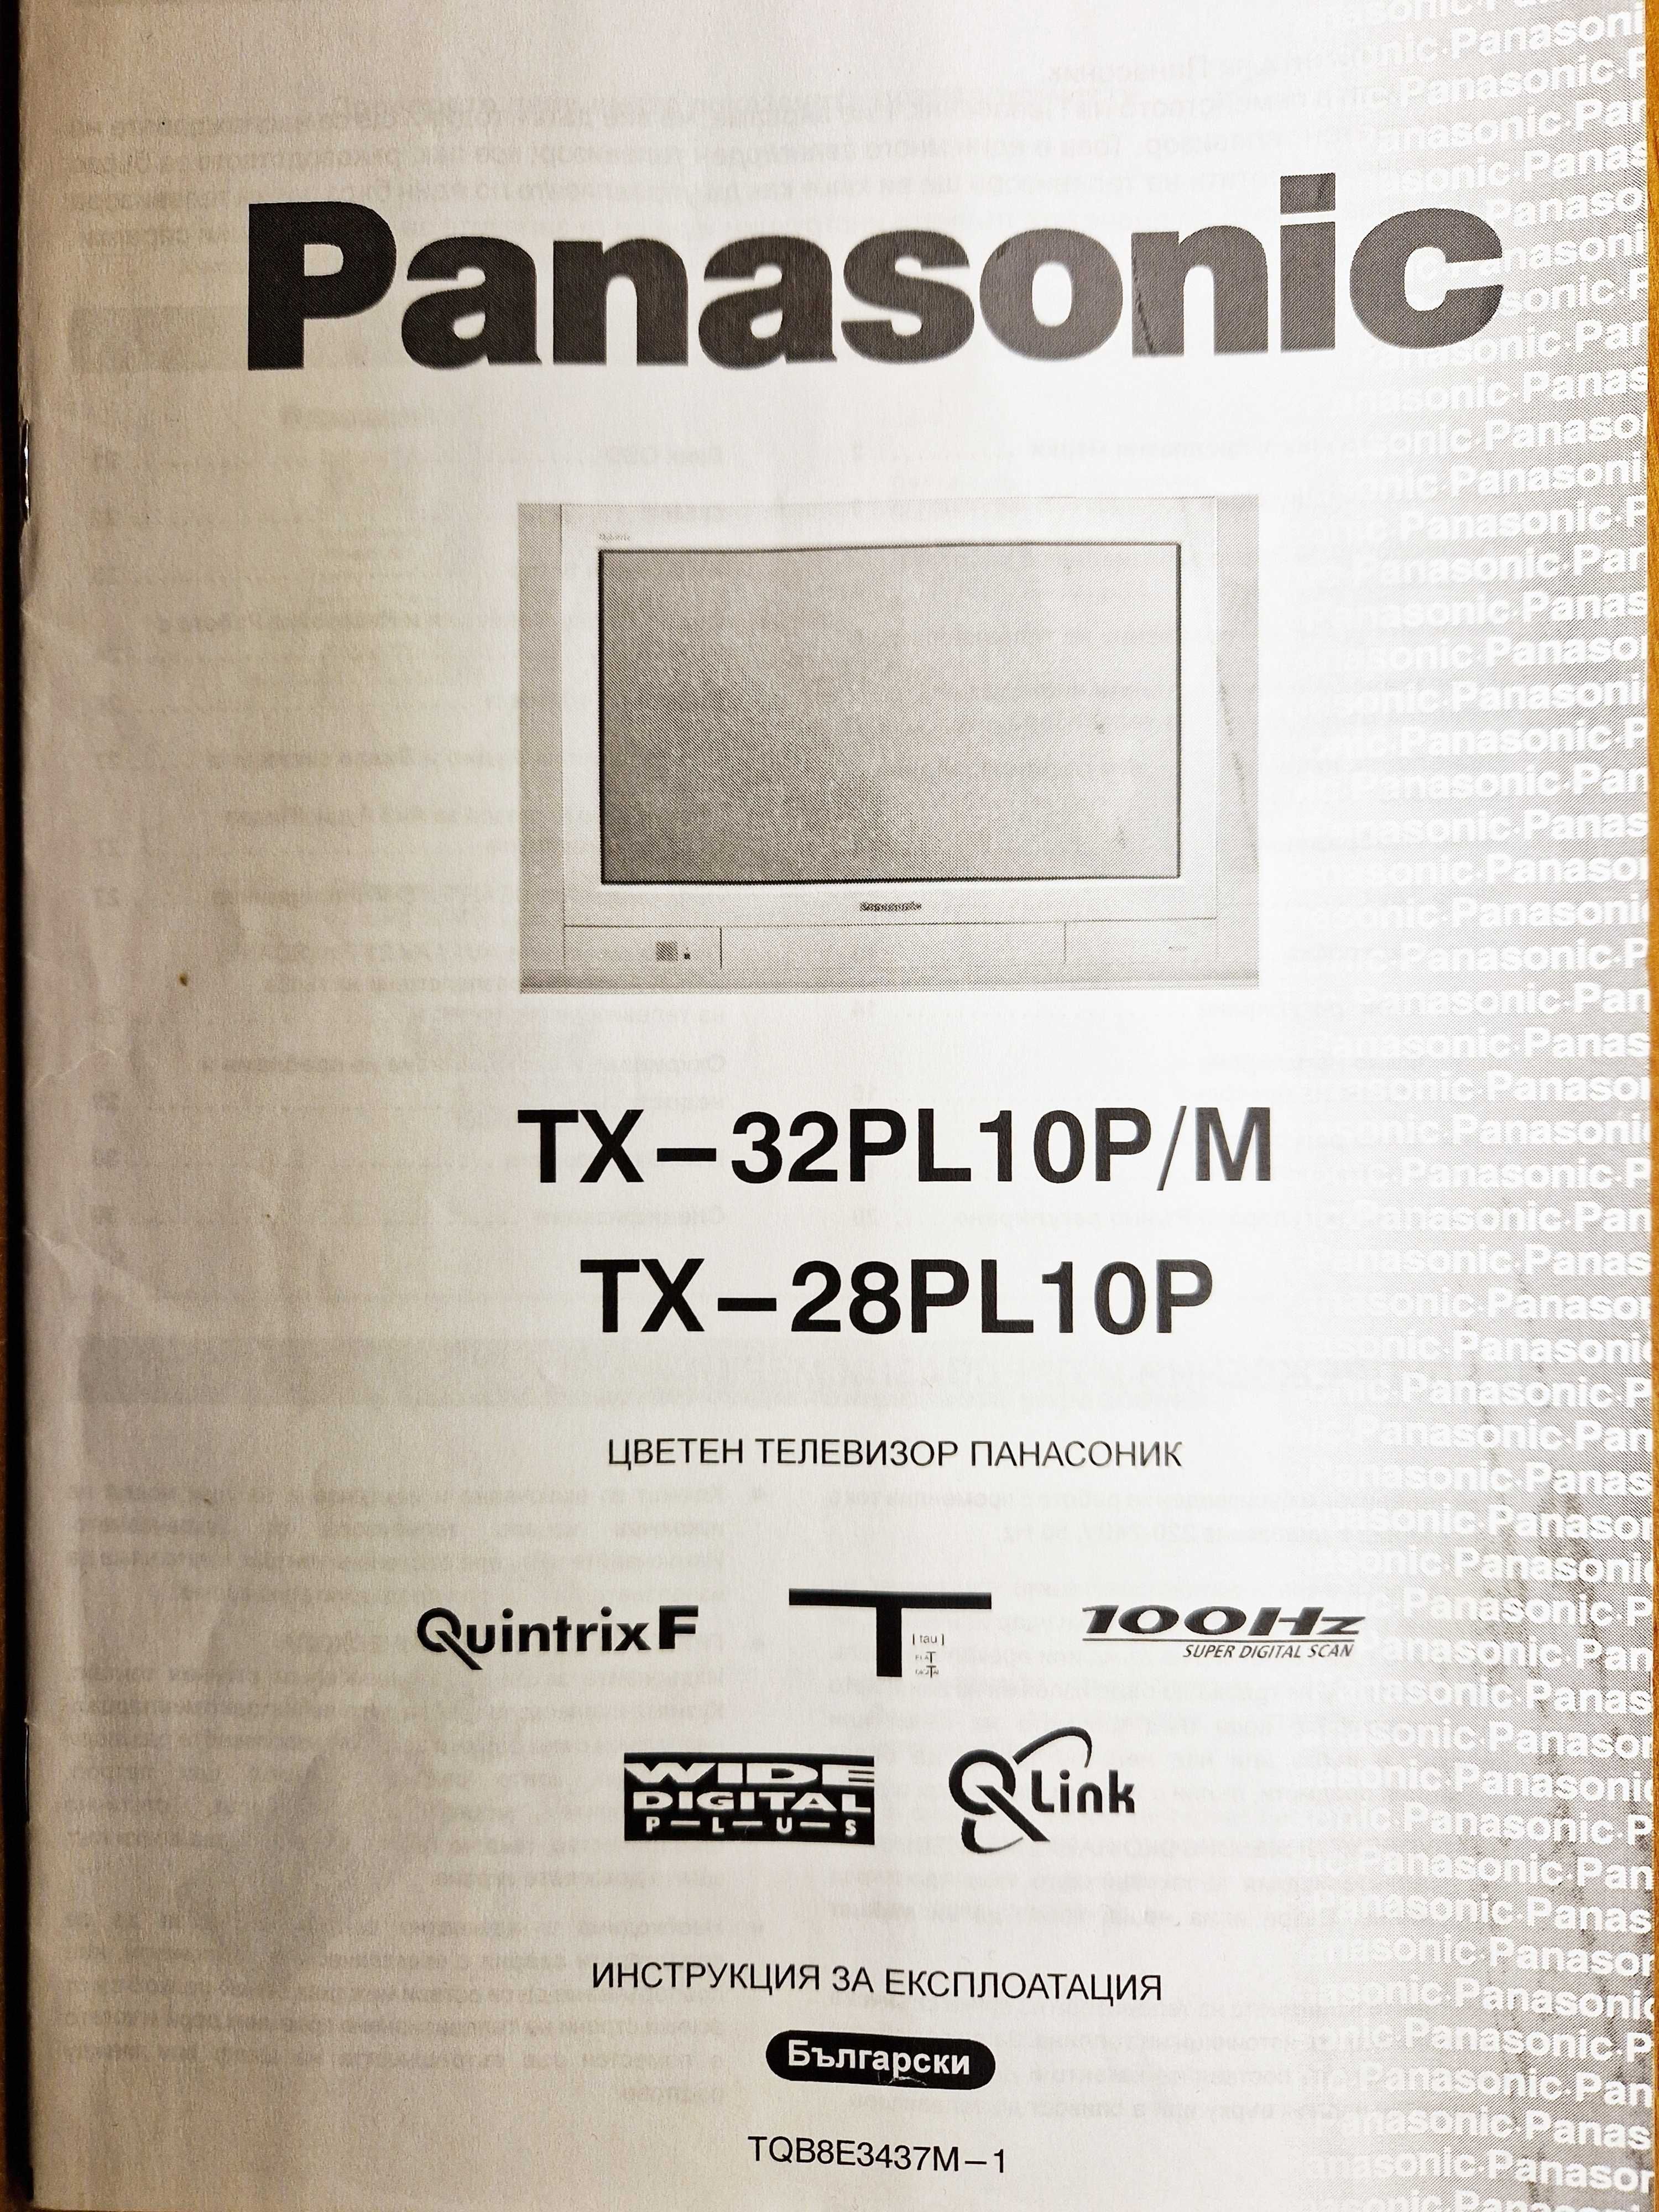 Широкоекранен телевизор Panasonic TX-32PL10P/M (с плосък кинескоп)